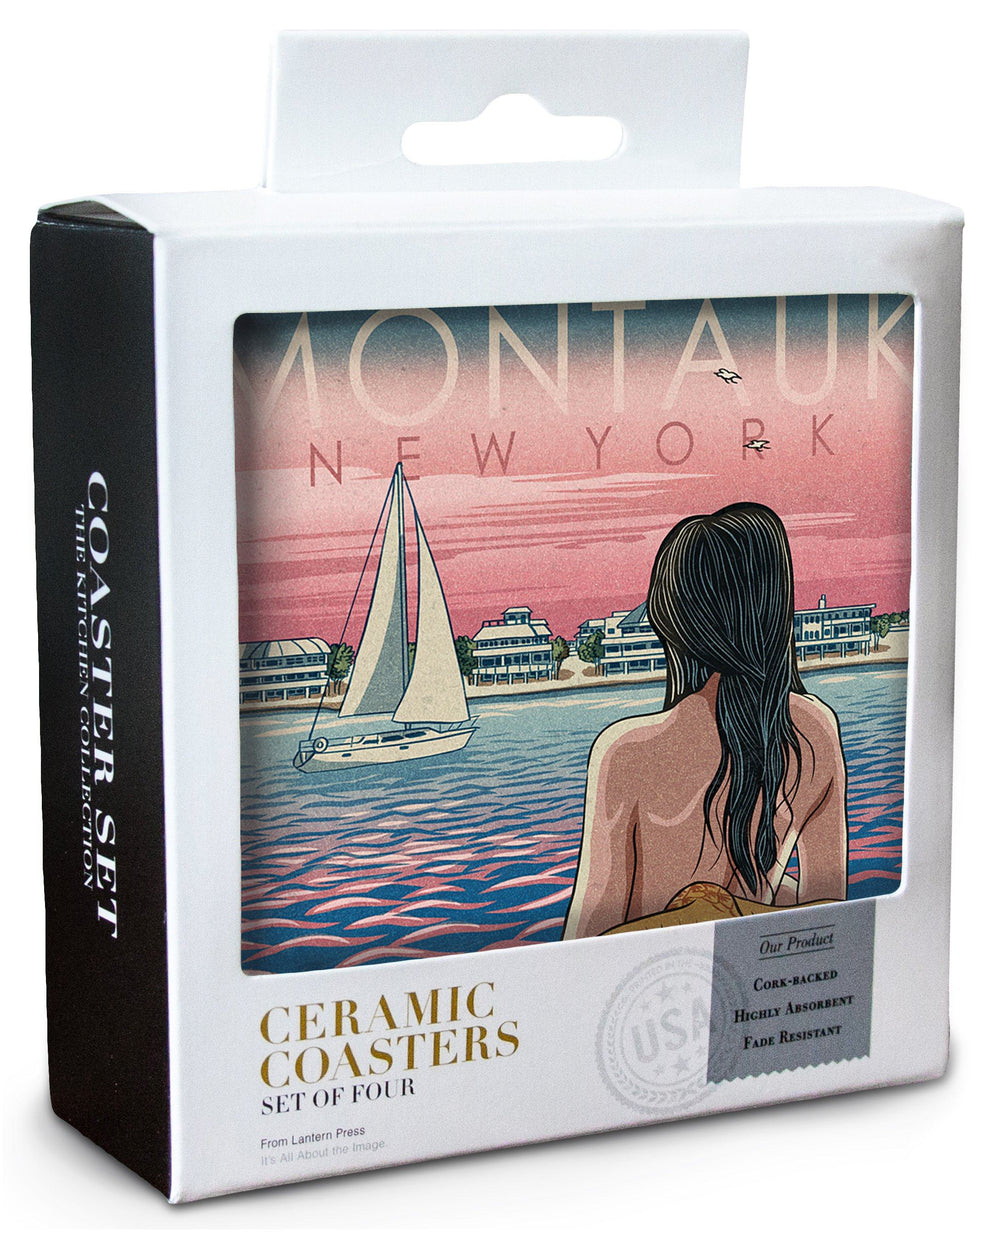 Montauk, New York, Mermaid & Beach, Woodblock Print, Lantern Press Artwork, Coaster Set Coasters Lantern Press 